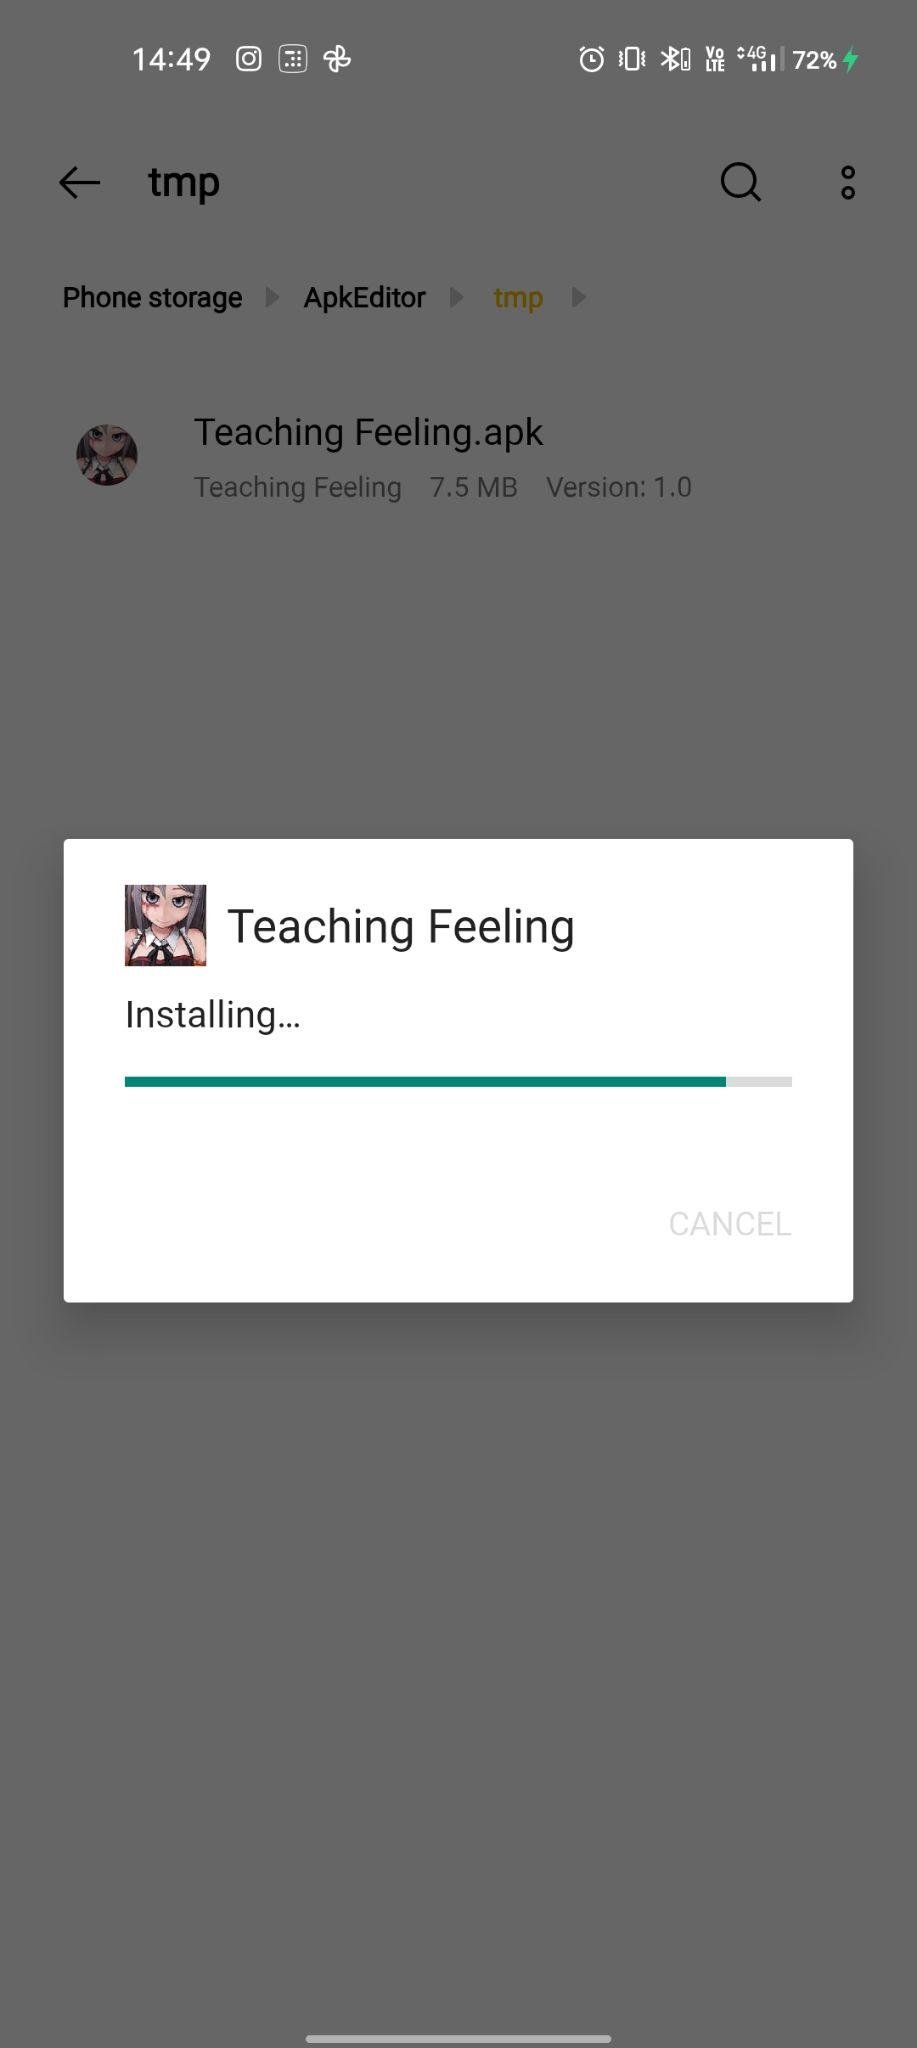 teaching feeling apk installing